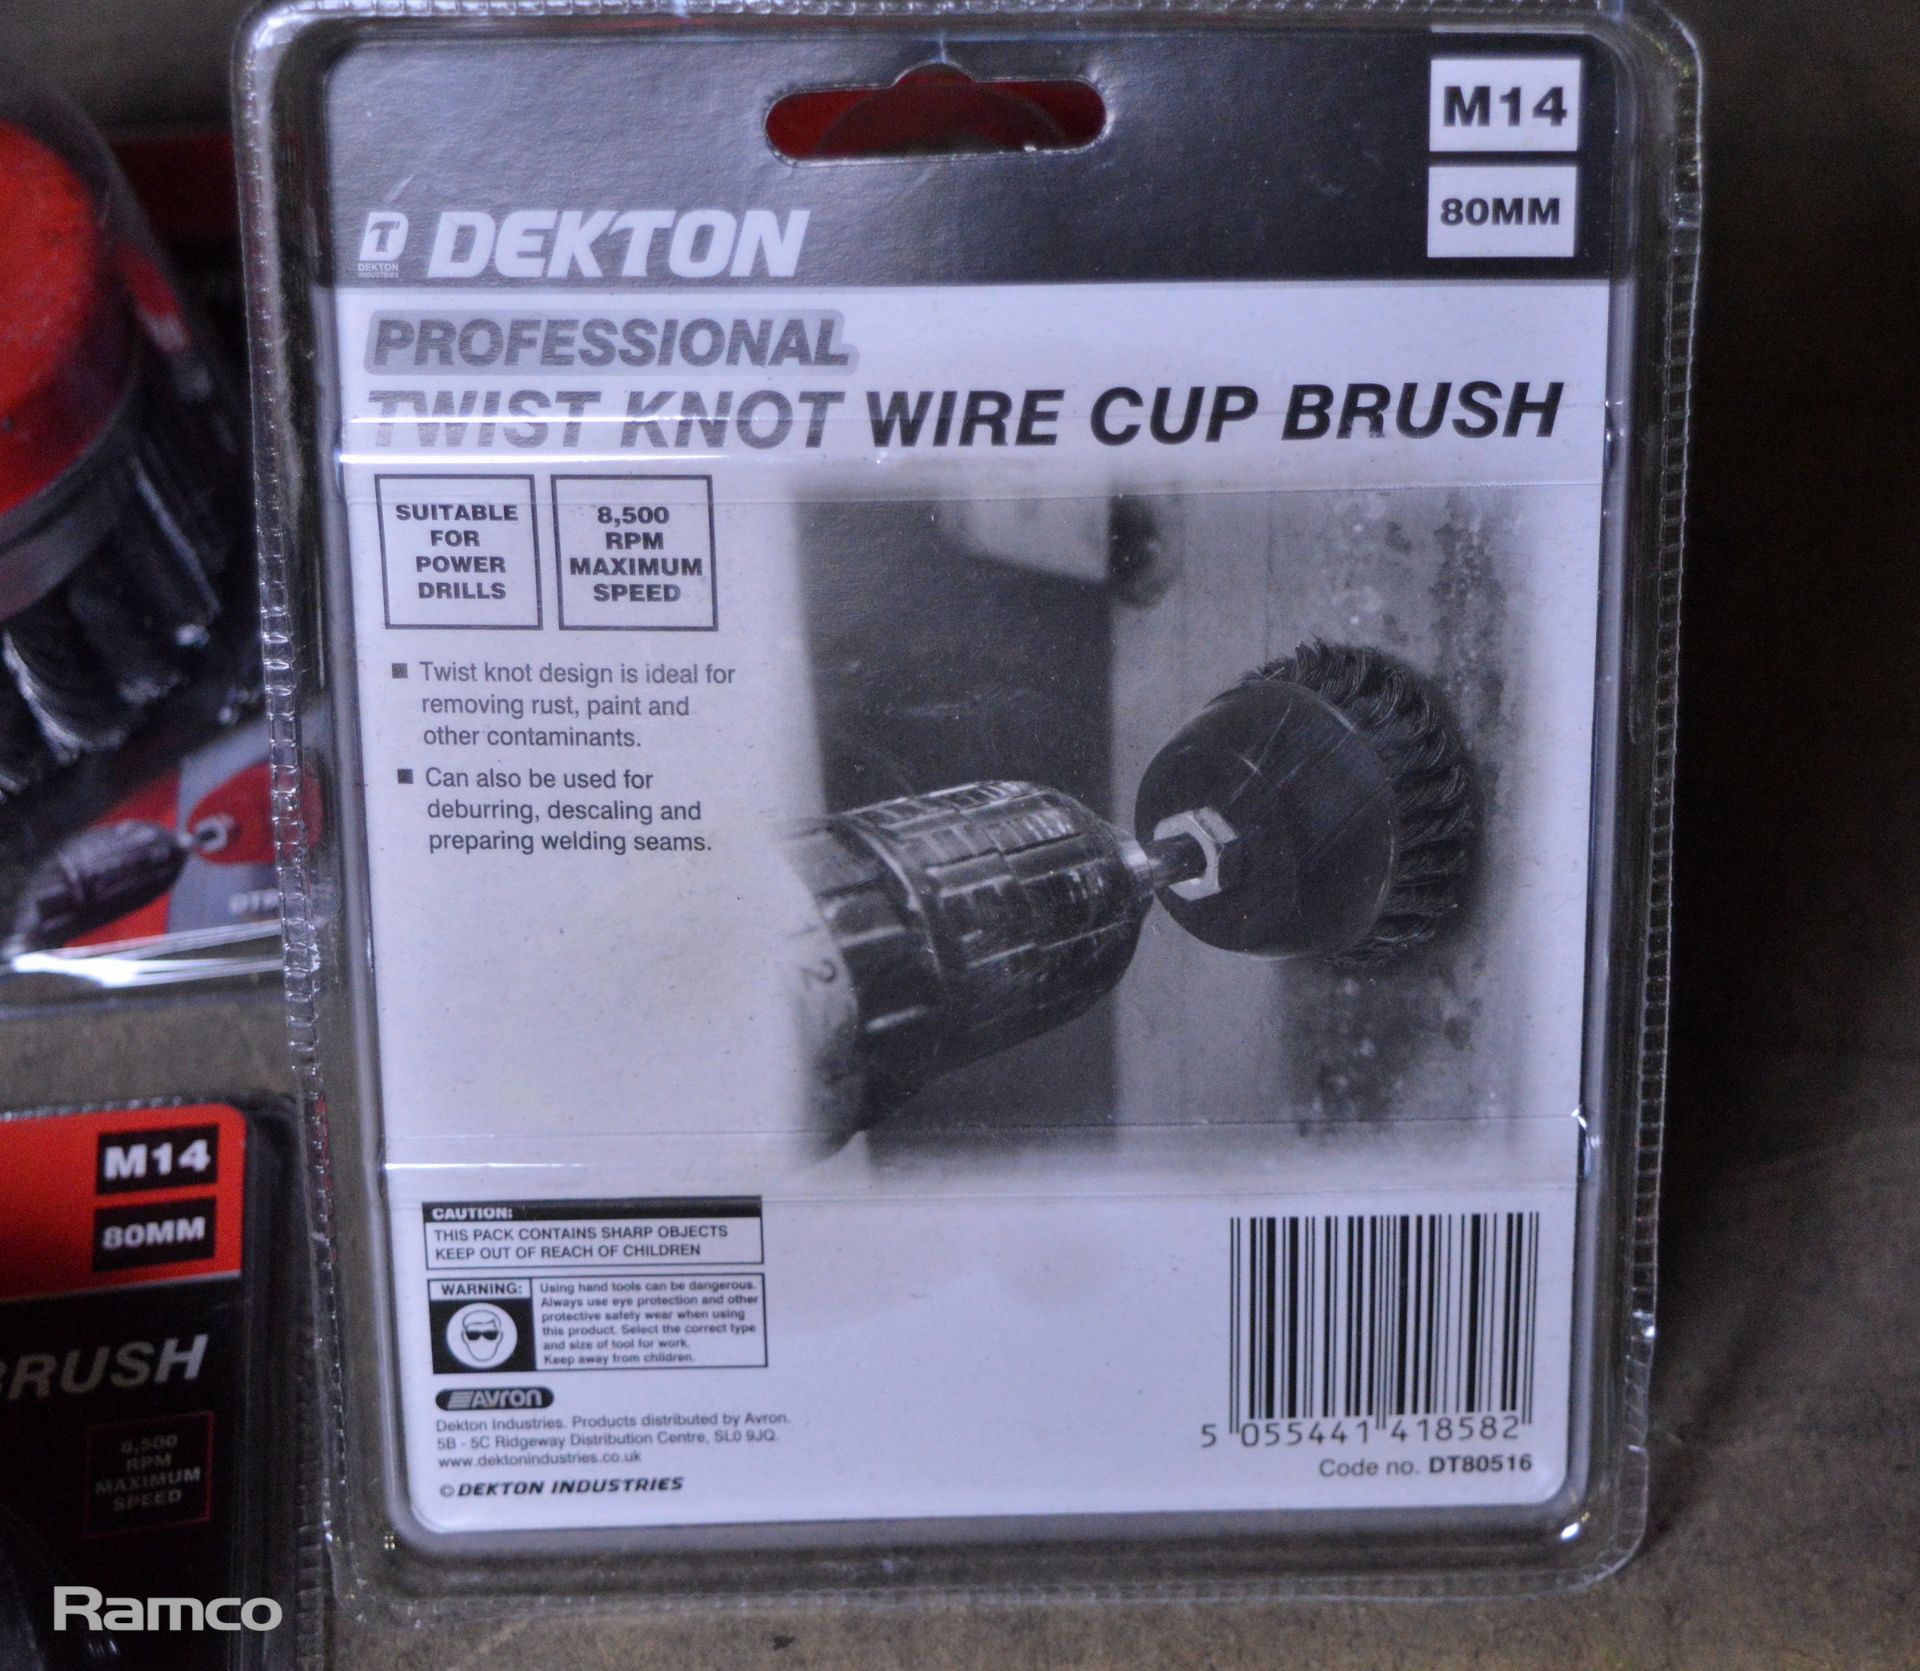 4x Dekton M14 80mm professional twist knot wire brush cups - Image 2 of 2